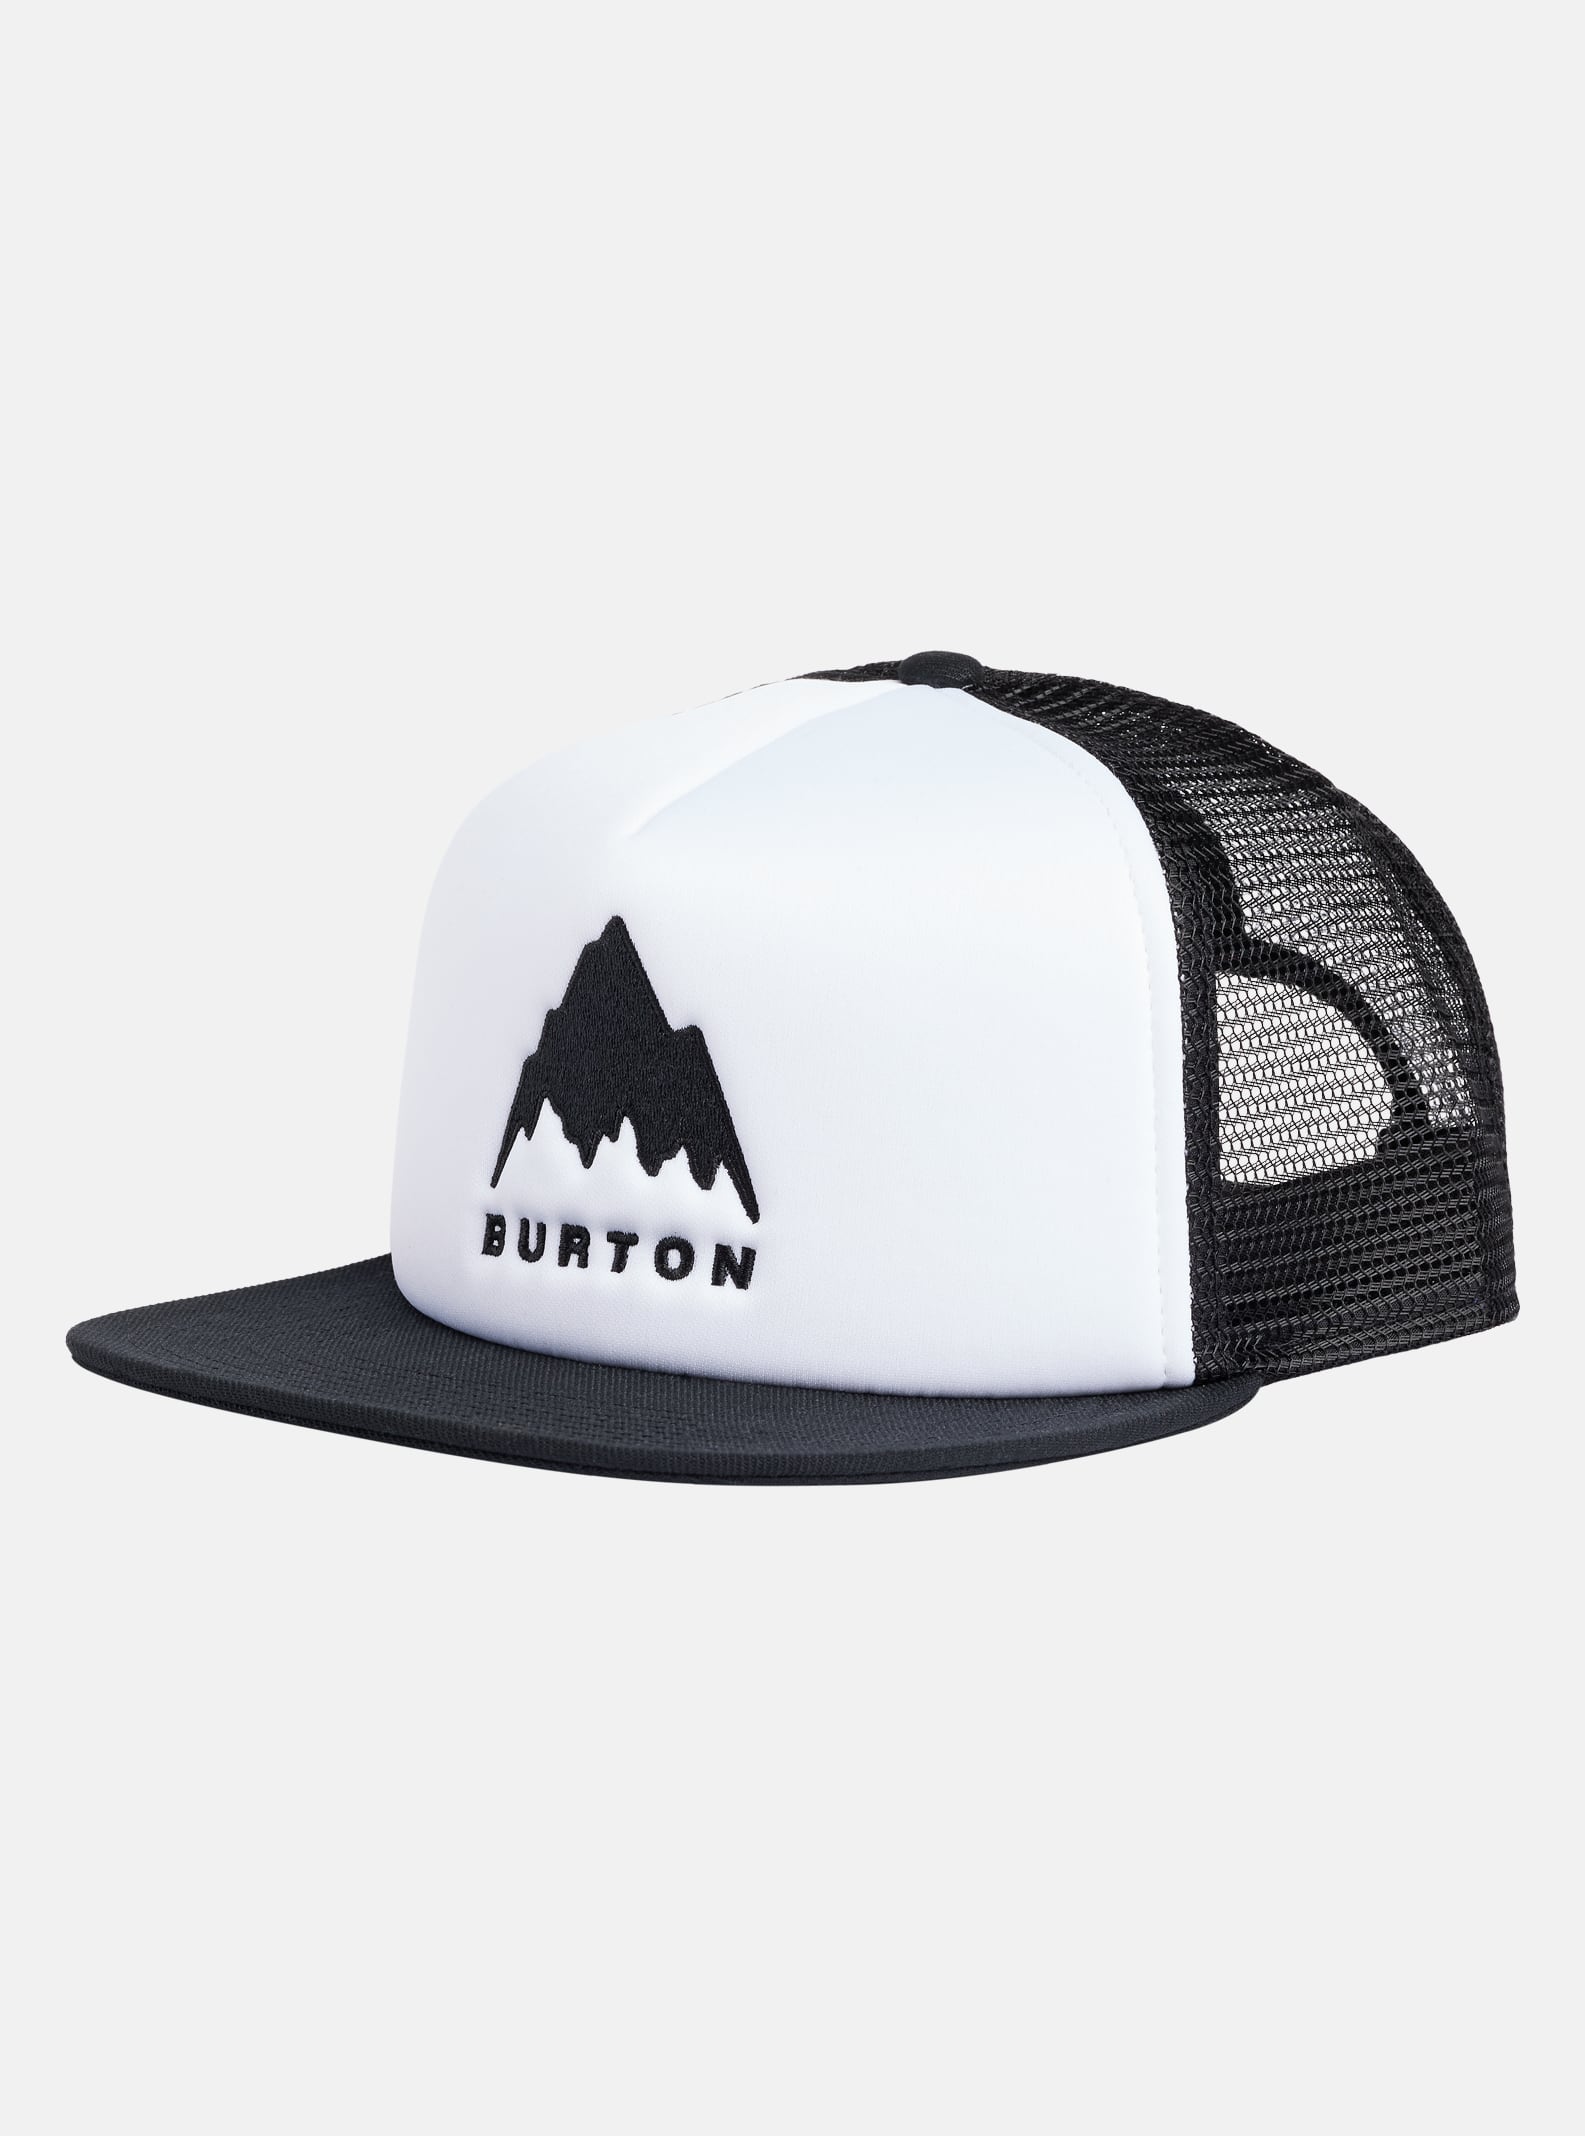 Men's Hats & Beanies | Burton Snowboards CA